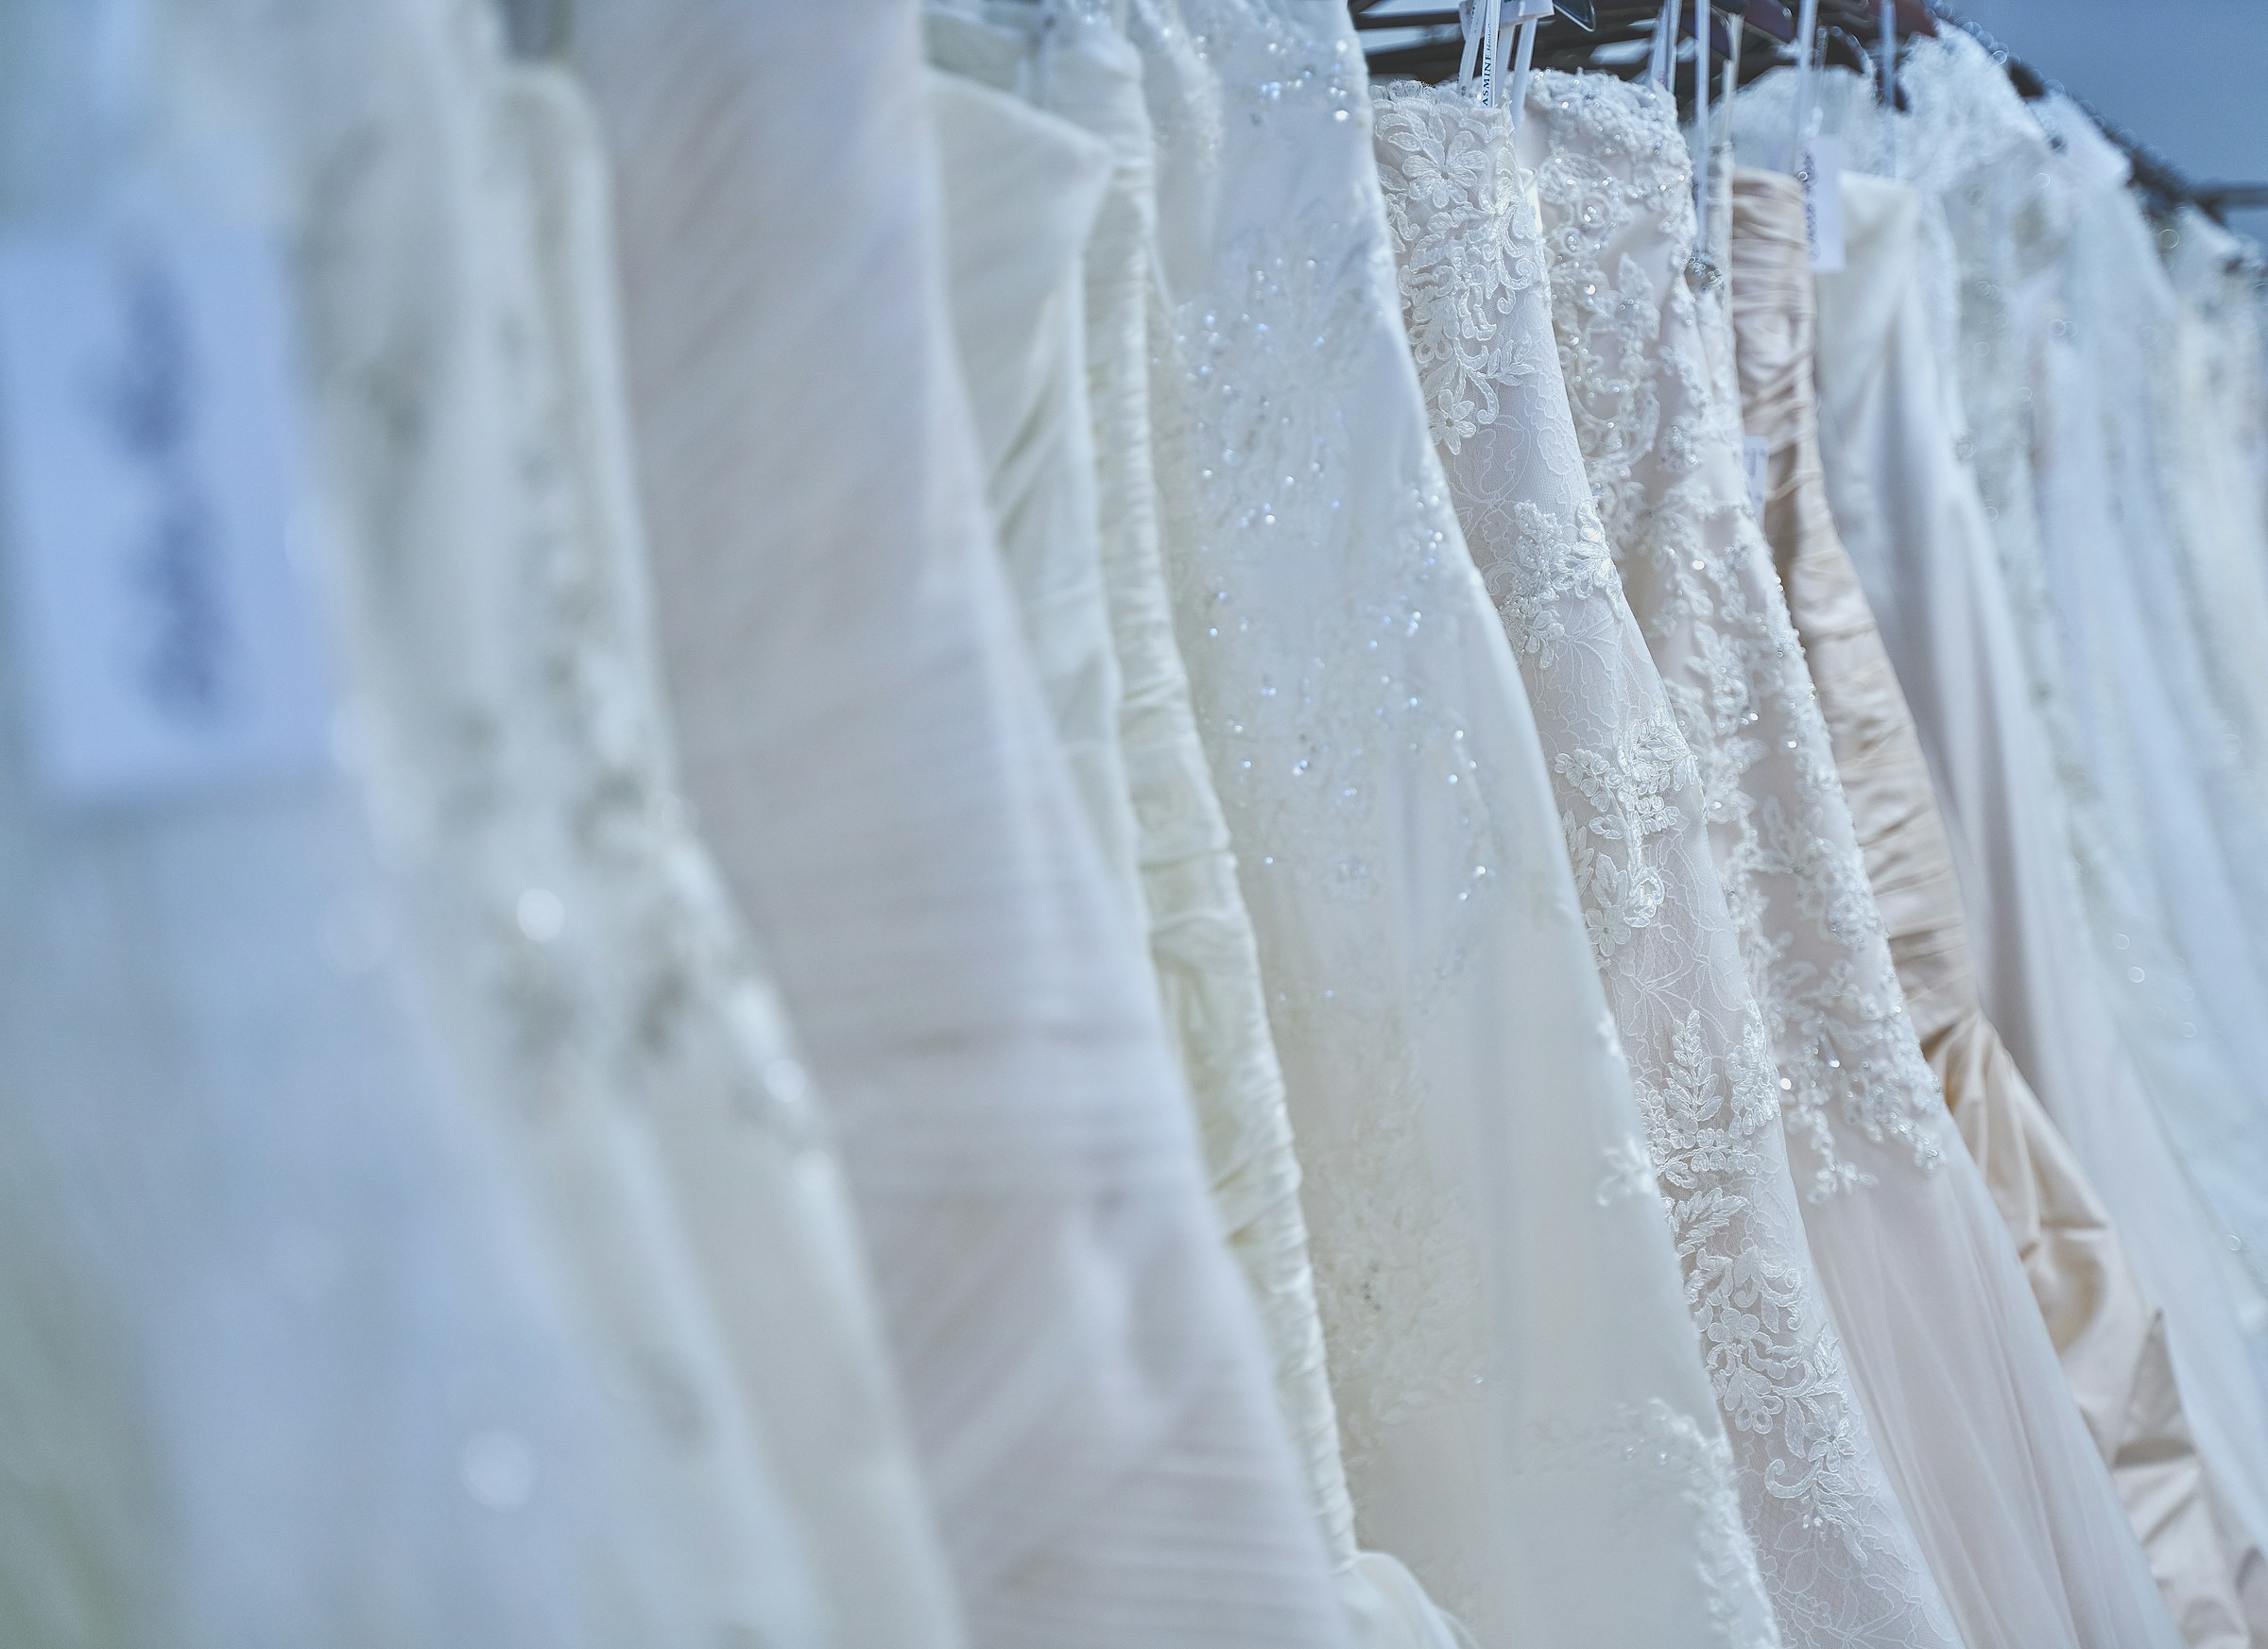 A row of wedding dresses | Source: Unsplash